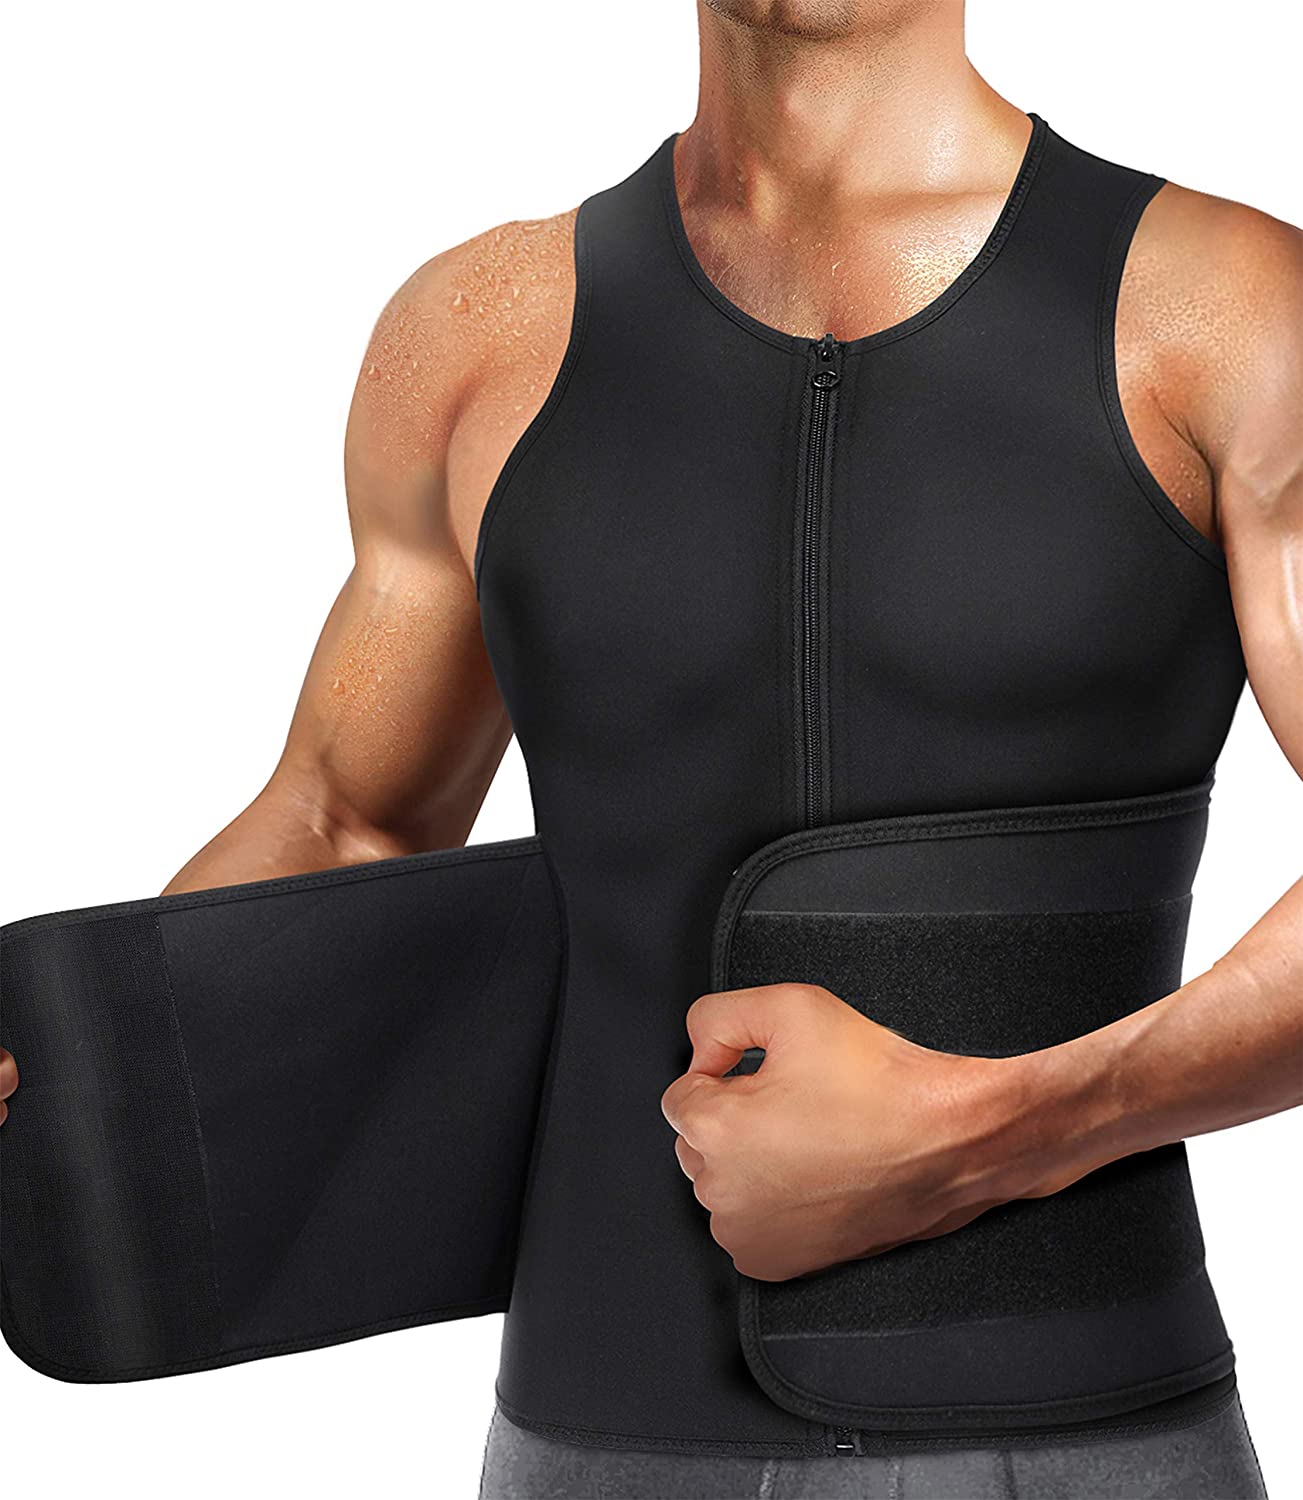 MISS MOLY Sauna Vest Men Neoprene Shirt 3X Sweat Tank Top Waist Trainer Workout Suit Slimming Hot Body Shaper Tummy for Gym Sport Bodybuilding